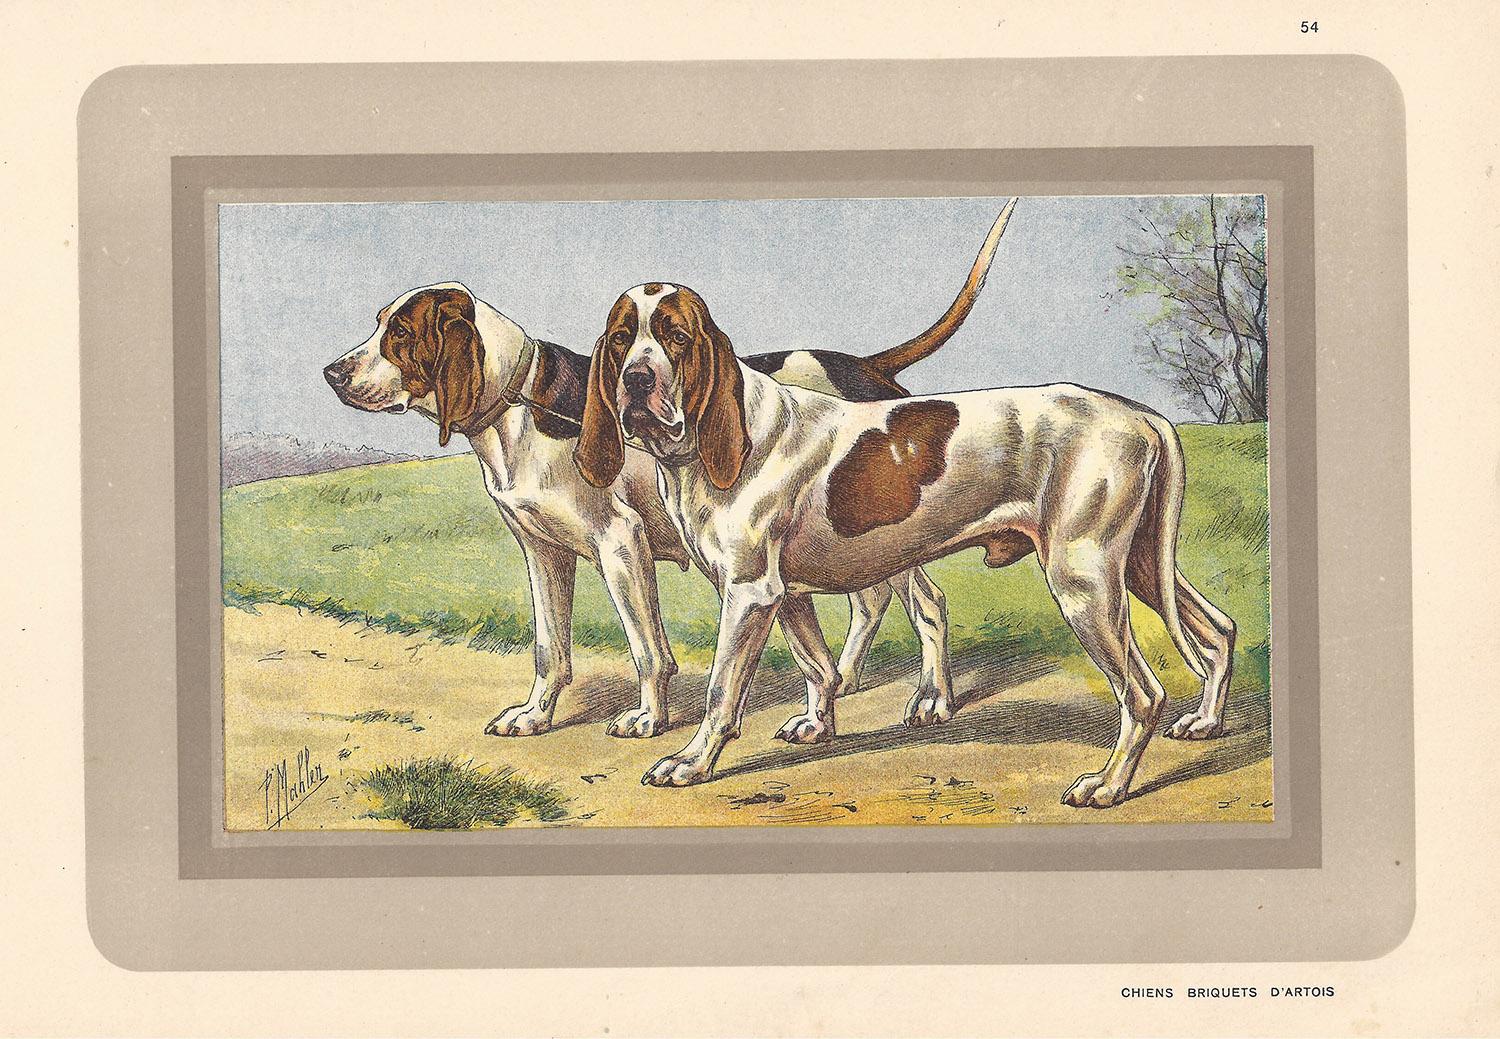 P. Mahler Animal Print - Chiens Briquets D'Artois, French hound, dog chromolithograph, 1930s